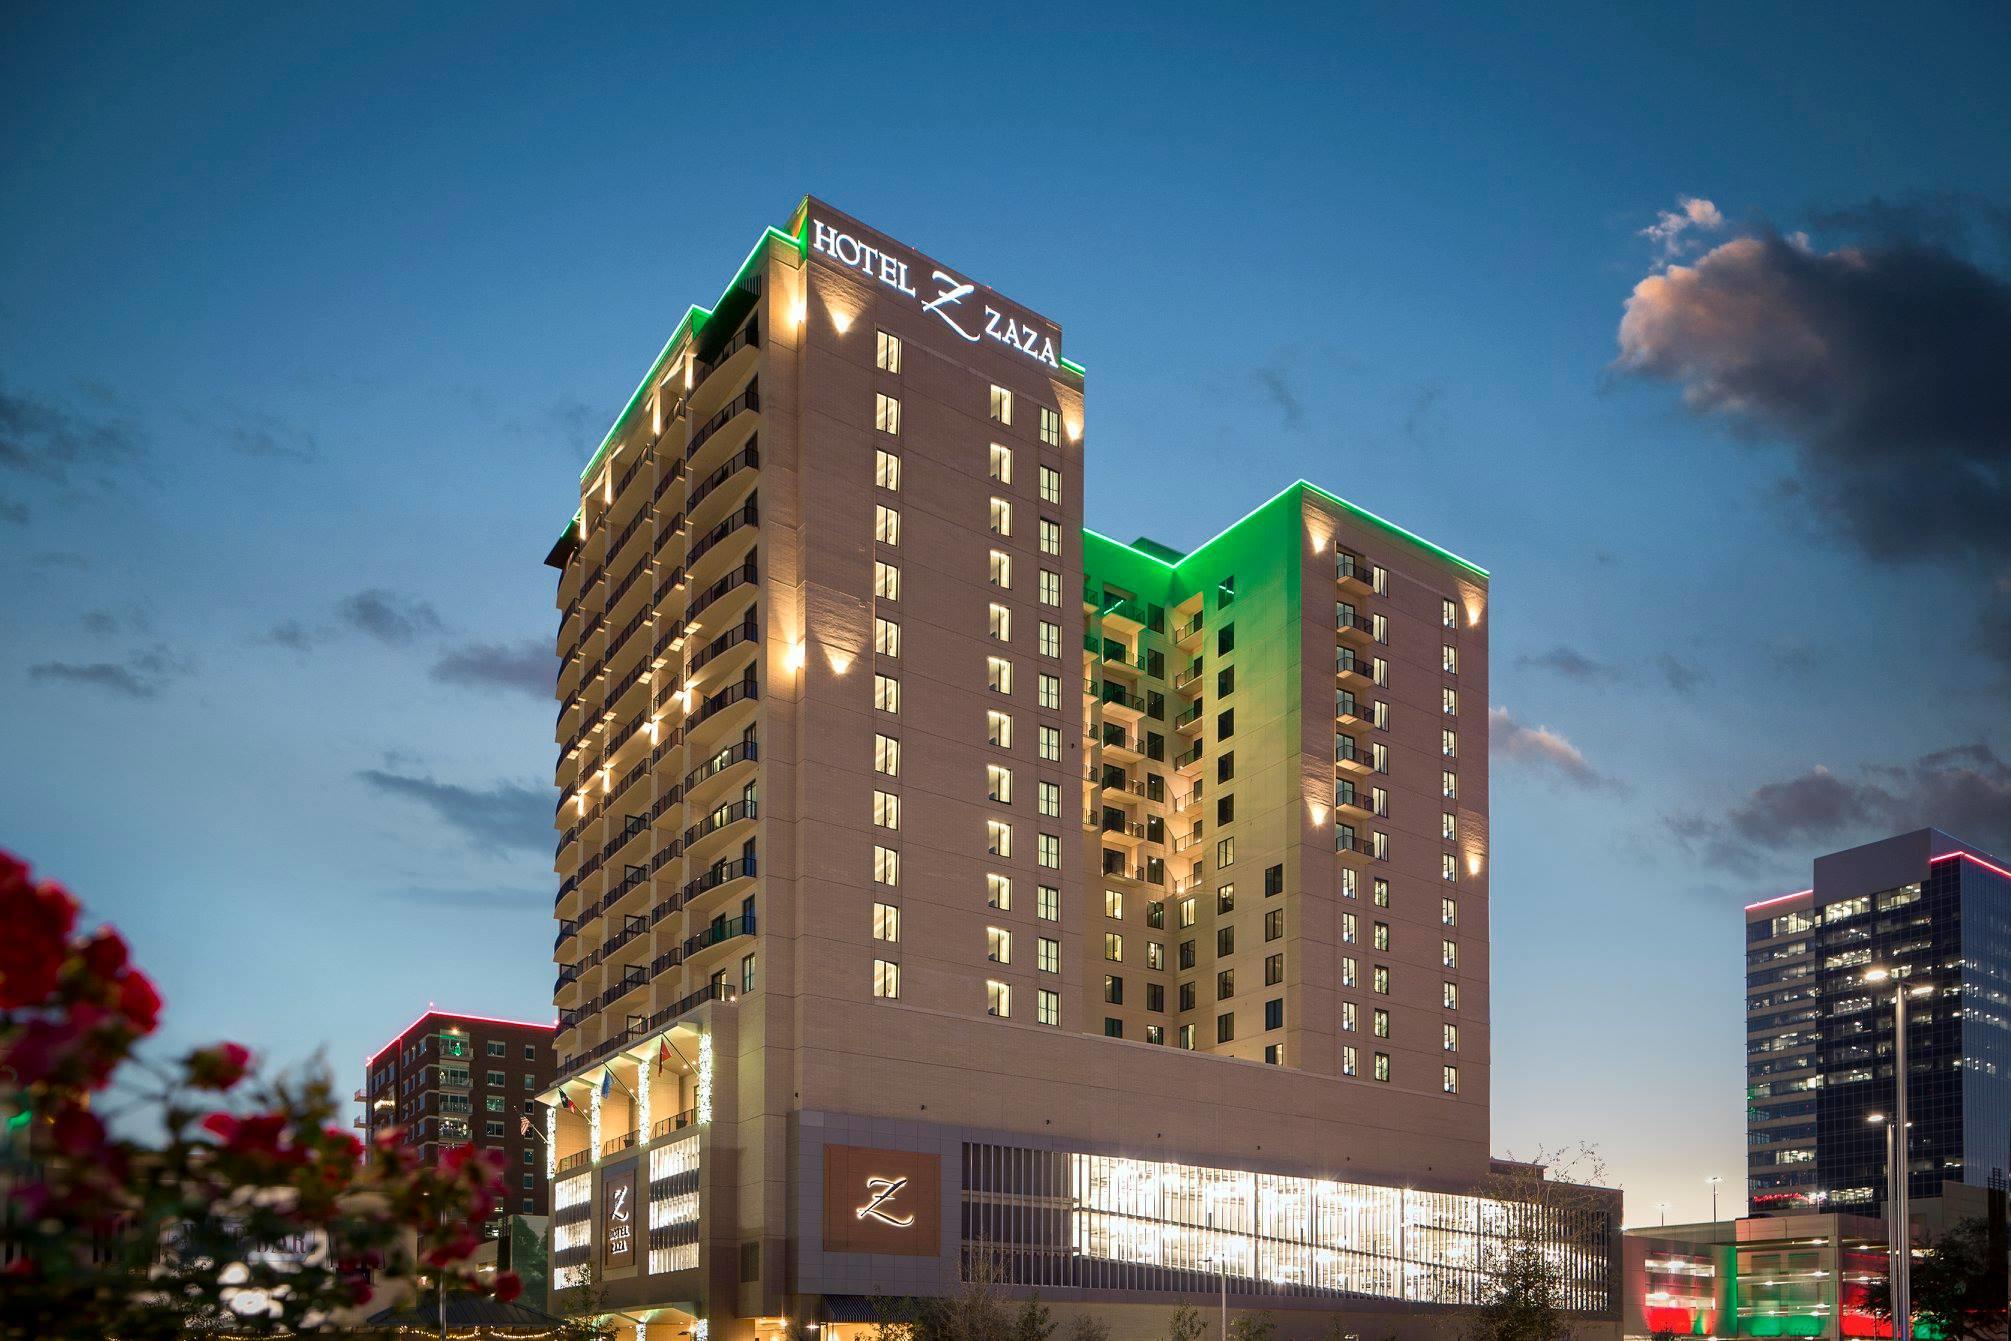 Hotel ZaZa Memorial City 9787 Katy Fwy, Houston, TX 77024